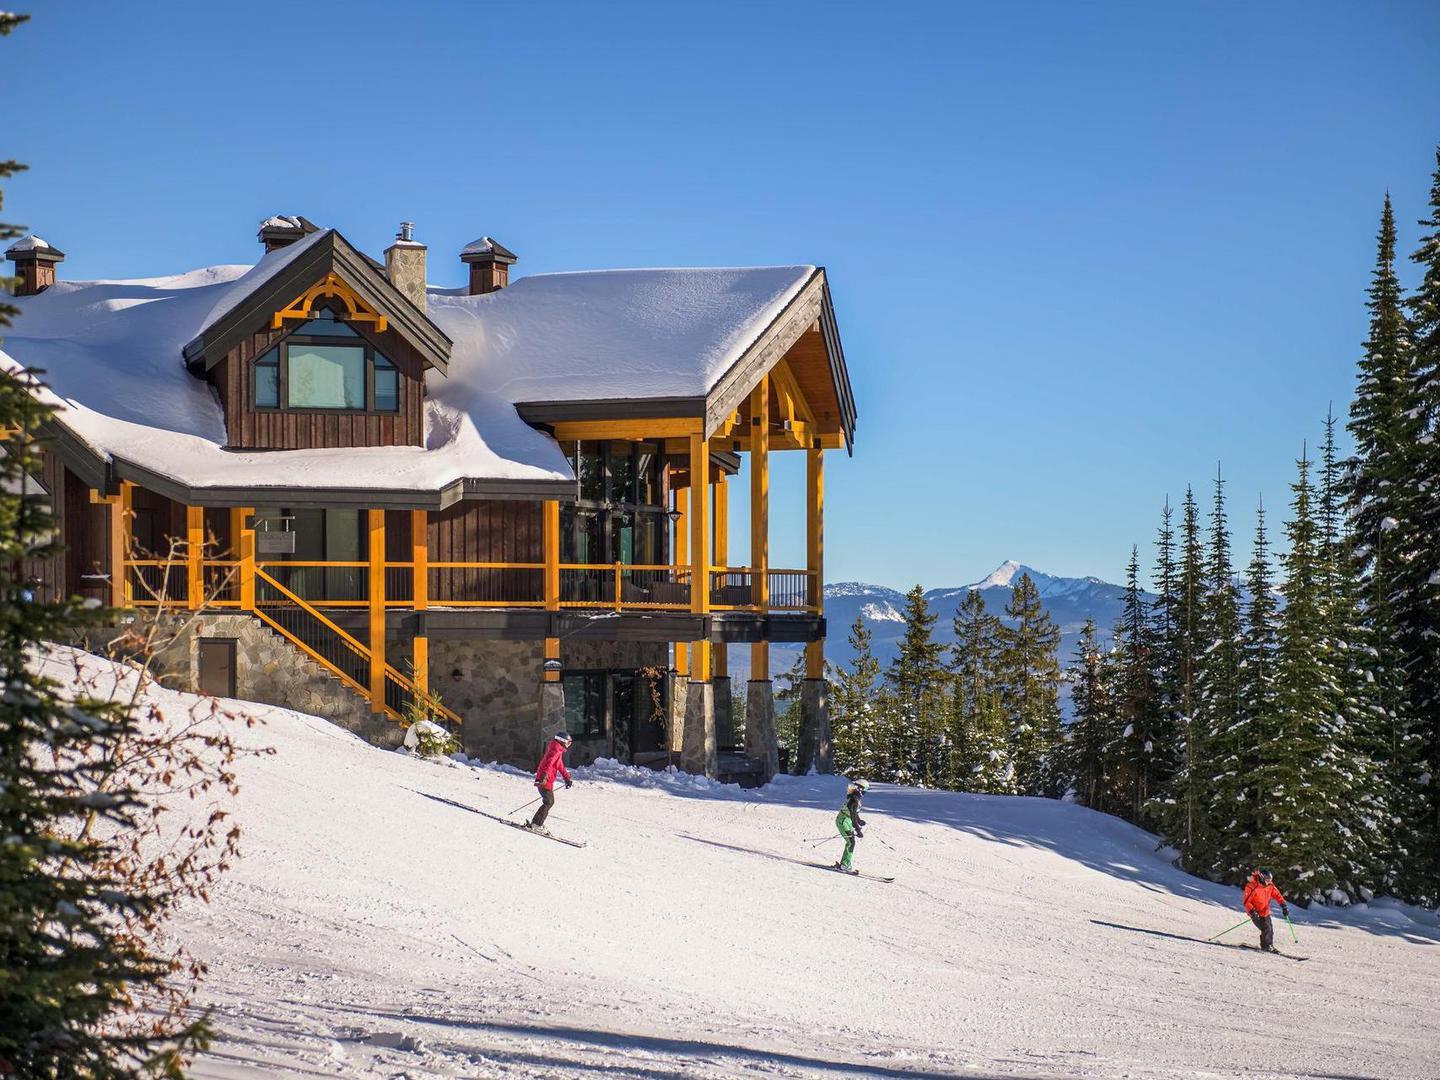 Skiers in the distance ski past Big White vacation rentals at Big White Ski Resort.